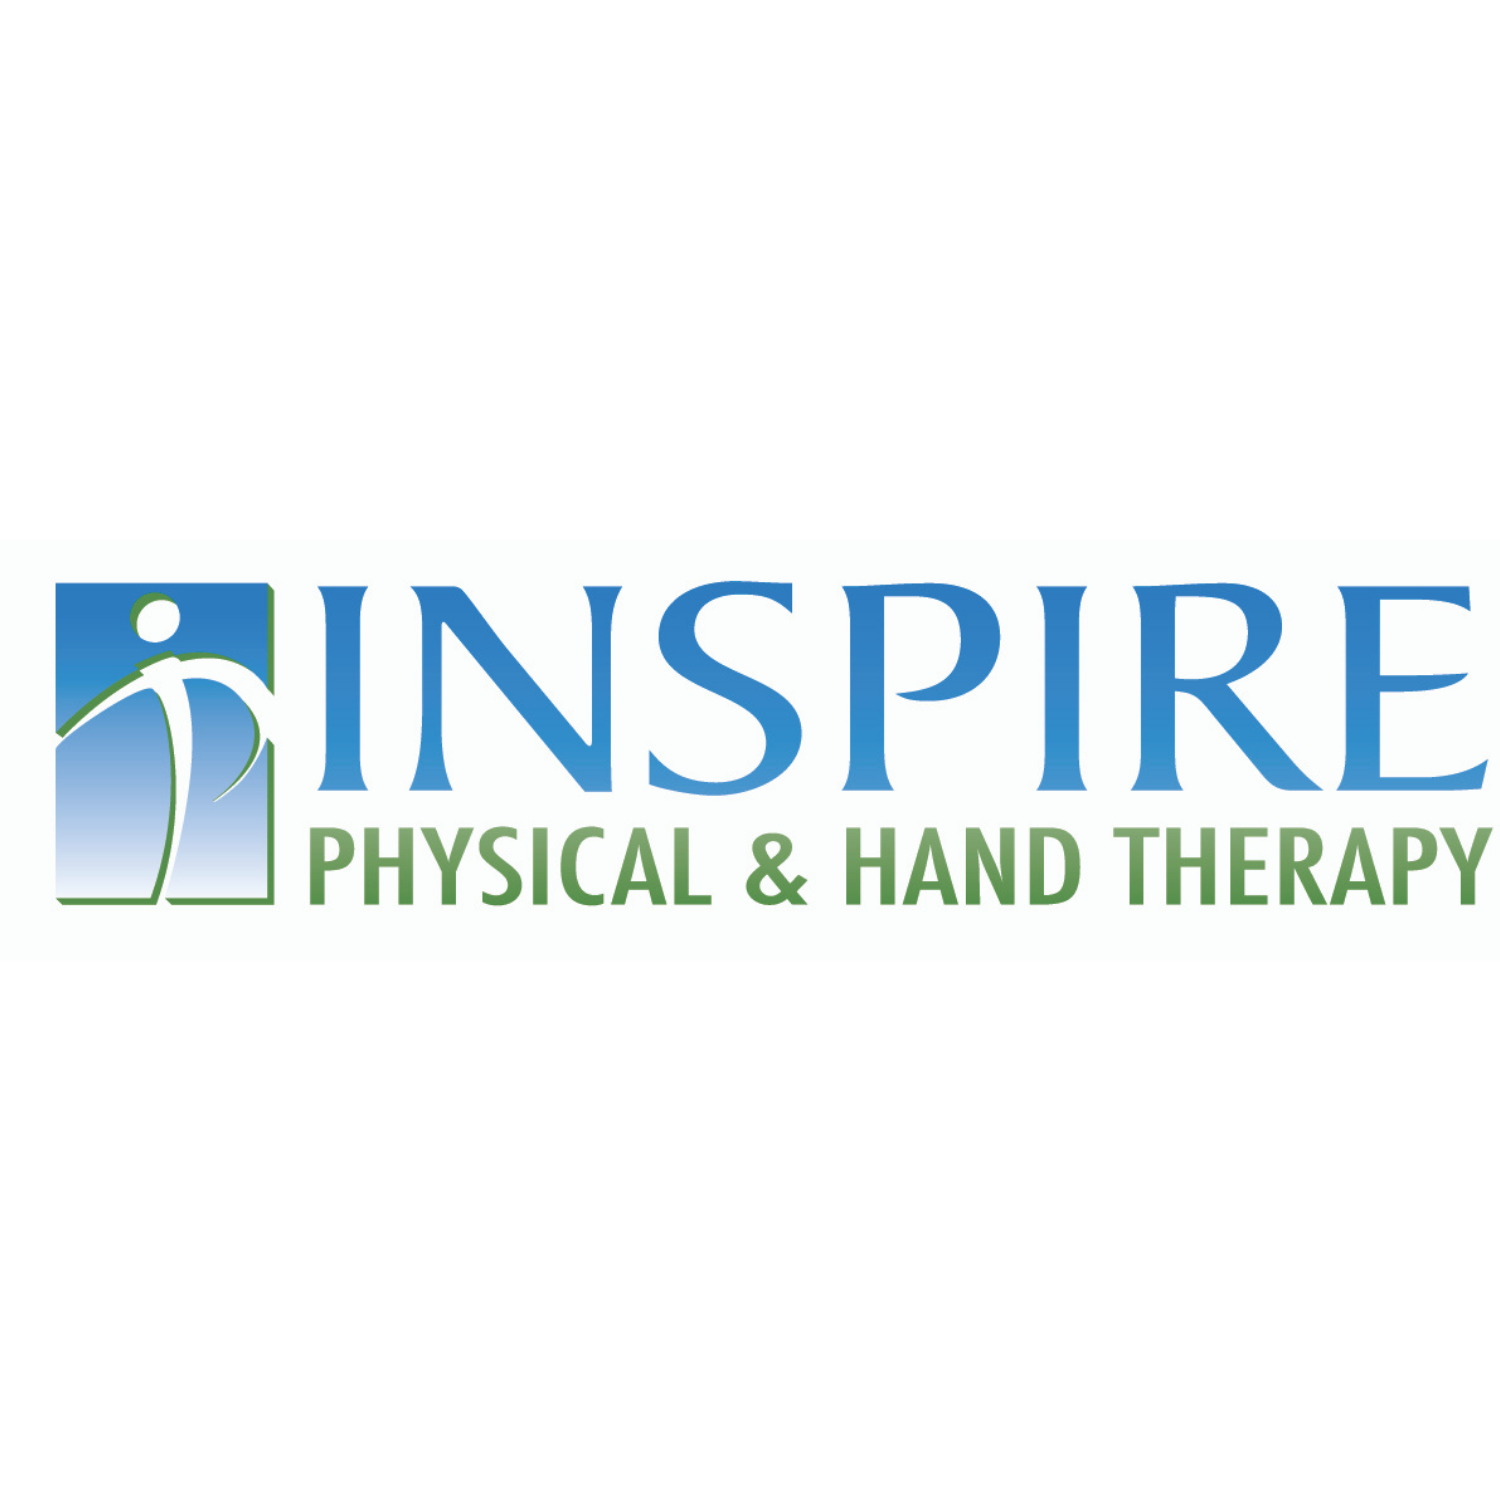 Inspire Physical & Hand Therapy - North Spokane, WA